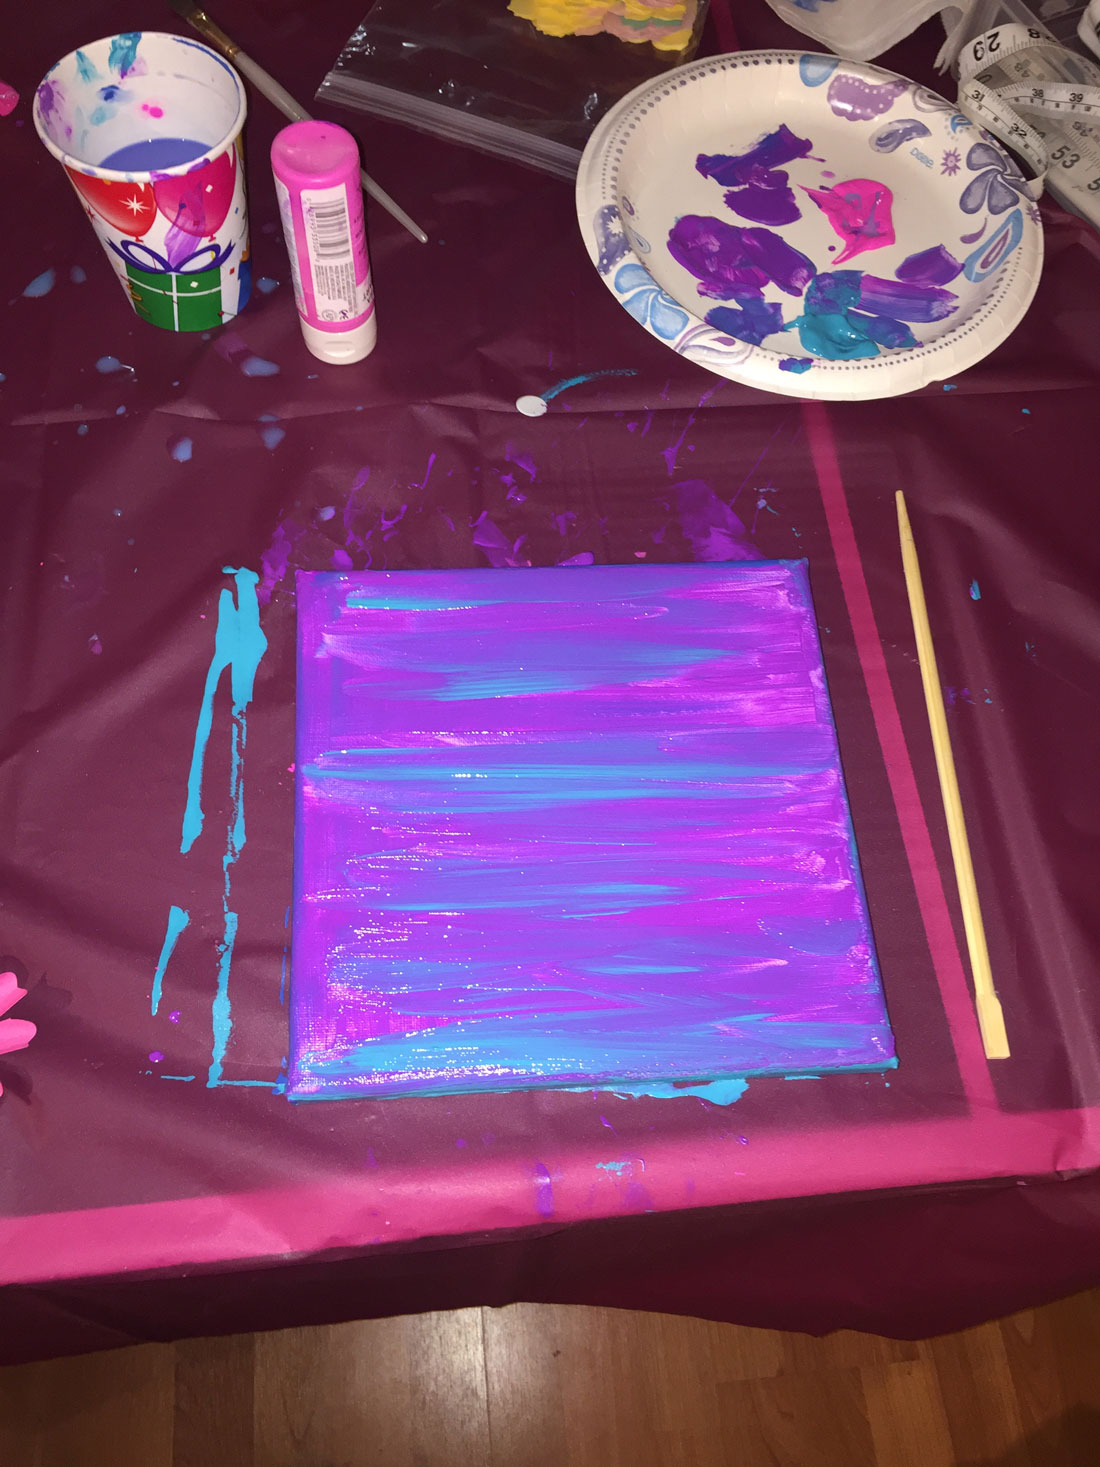 Fun Acrylic Painting Birthday Activity - painting canvas